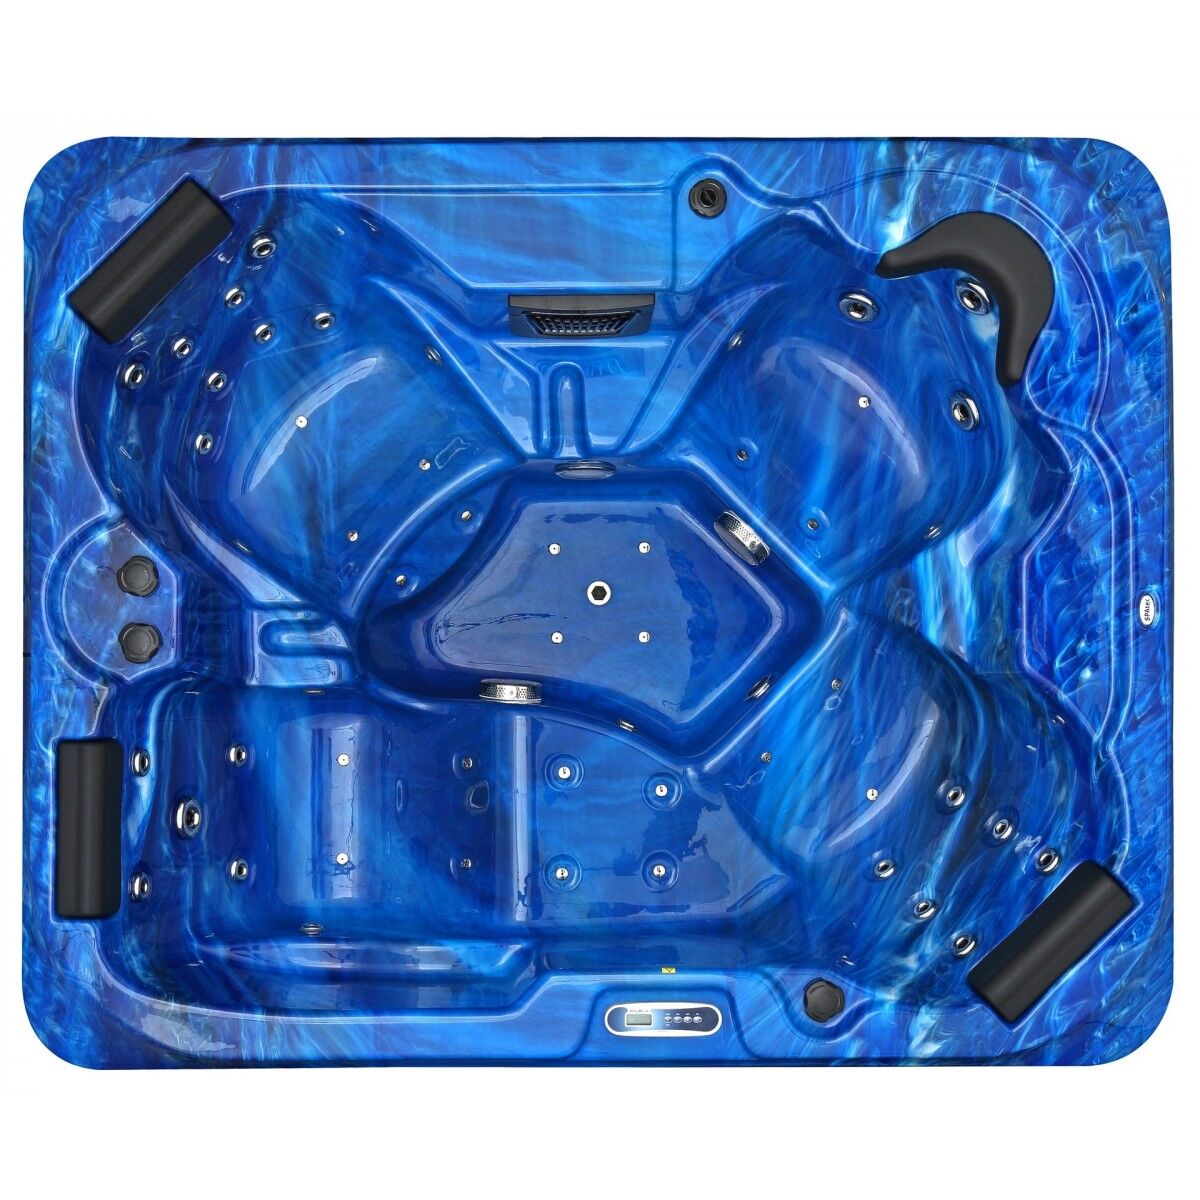 Spatec Jacuzzi Outdoor Whirlpools - SPAtec 500B blau